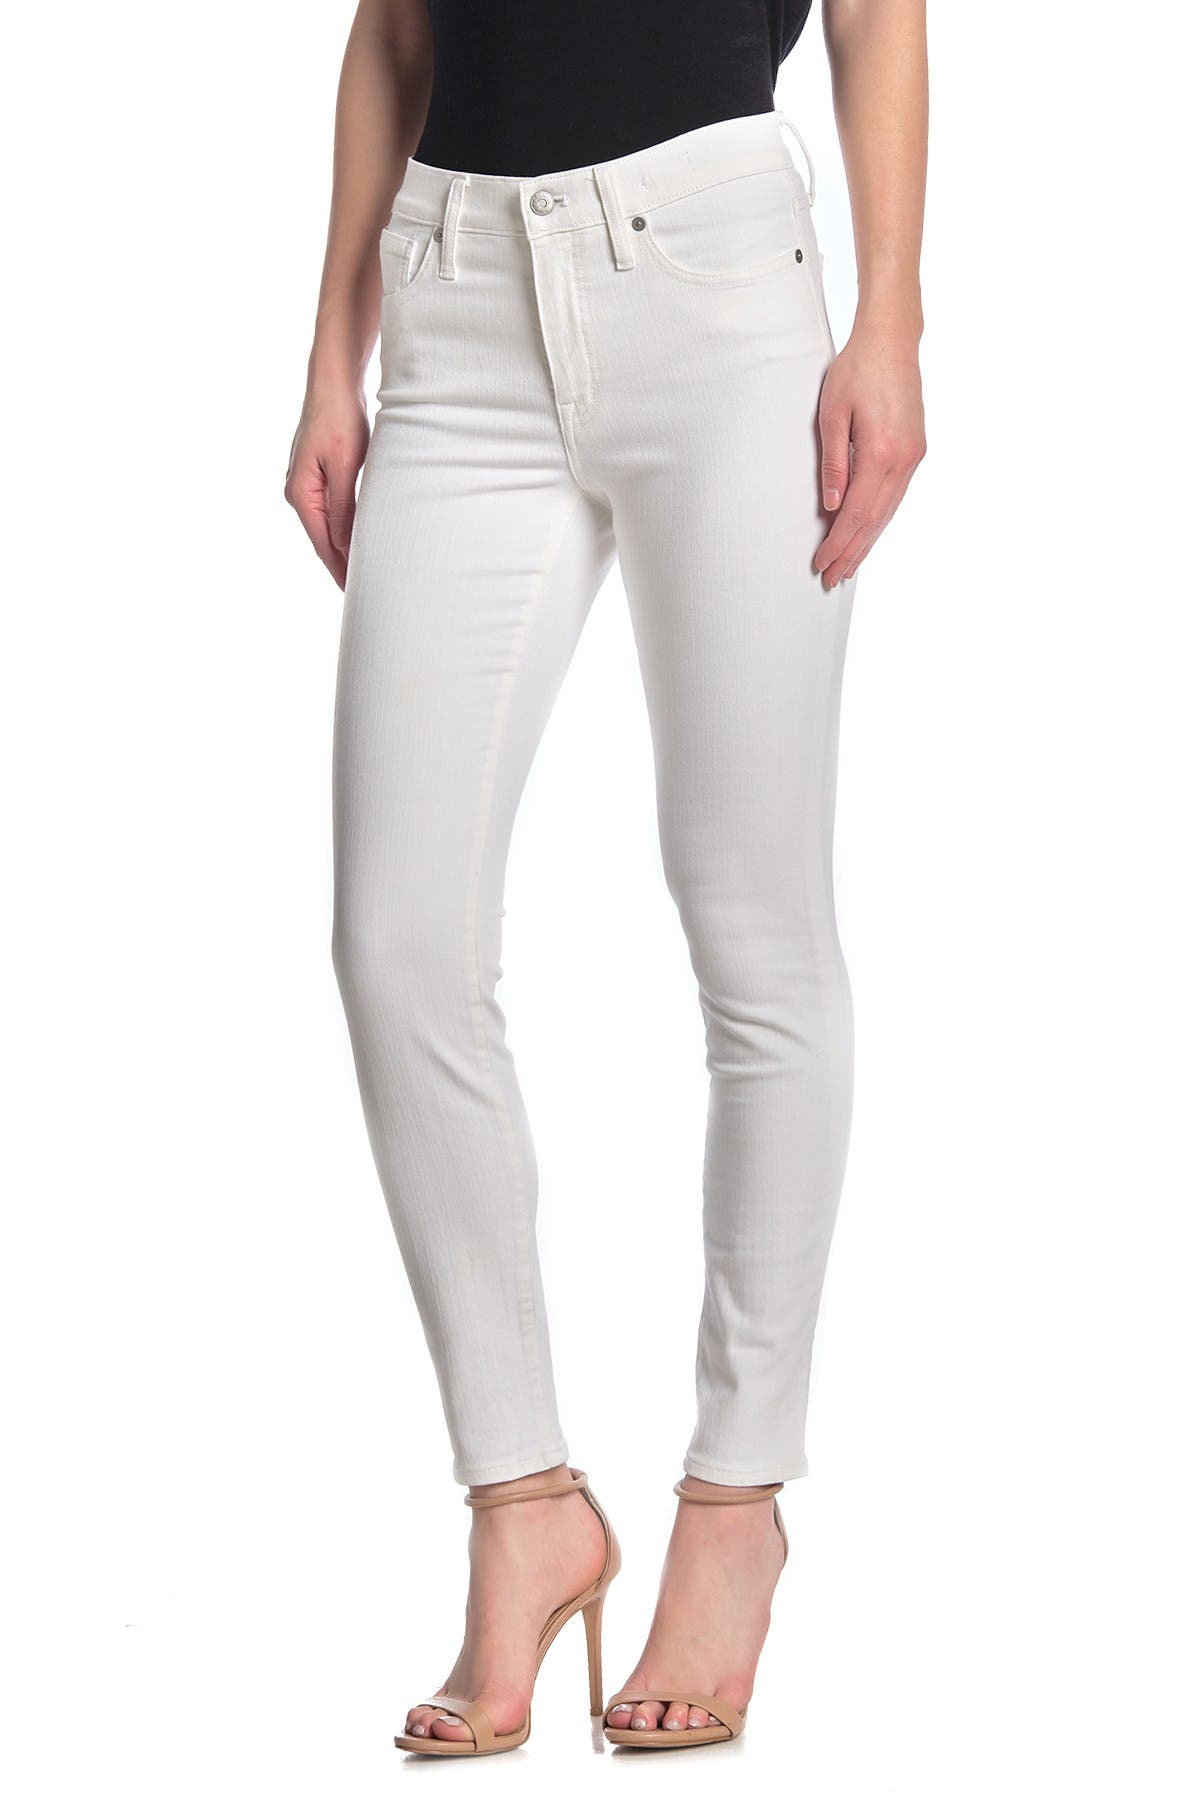 madewell white skinny jeans